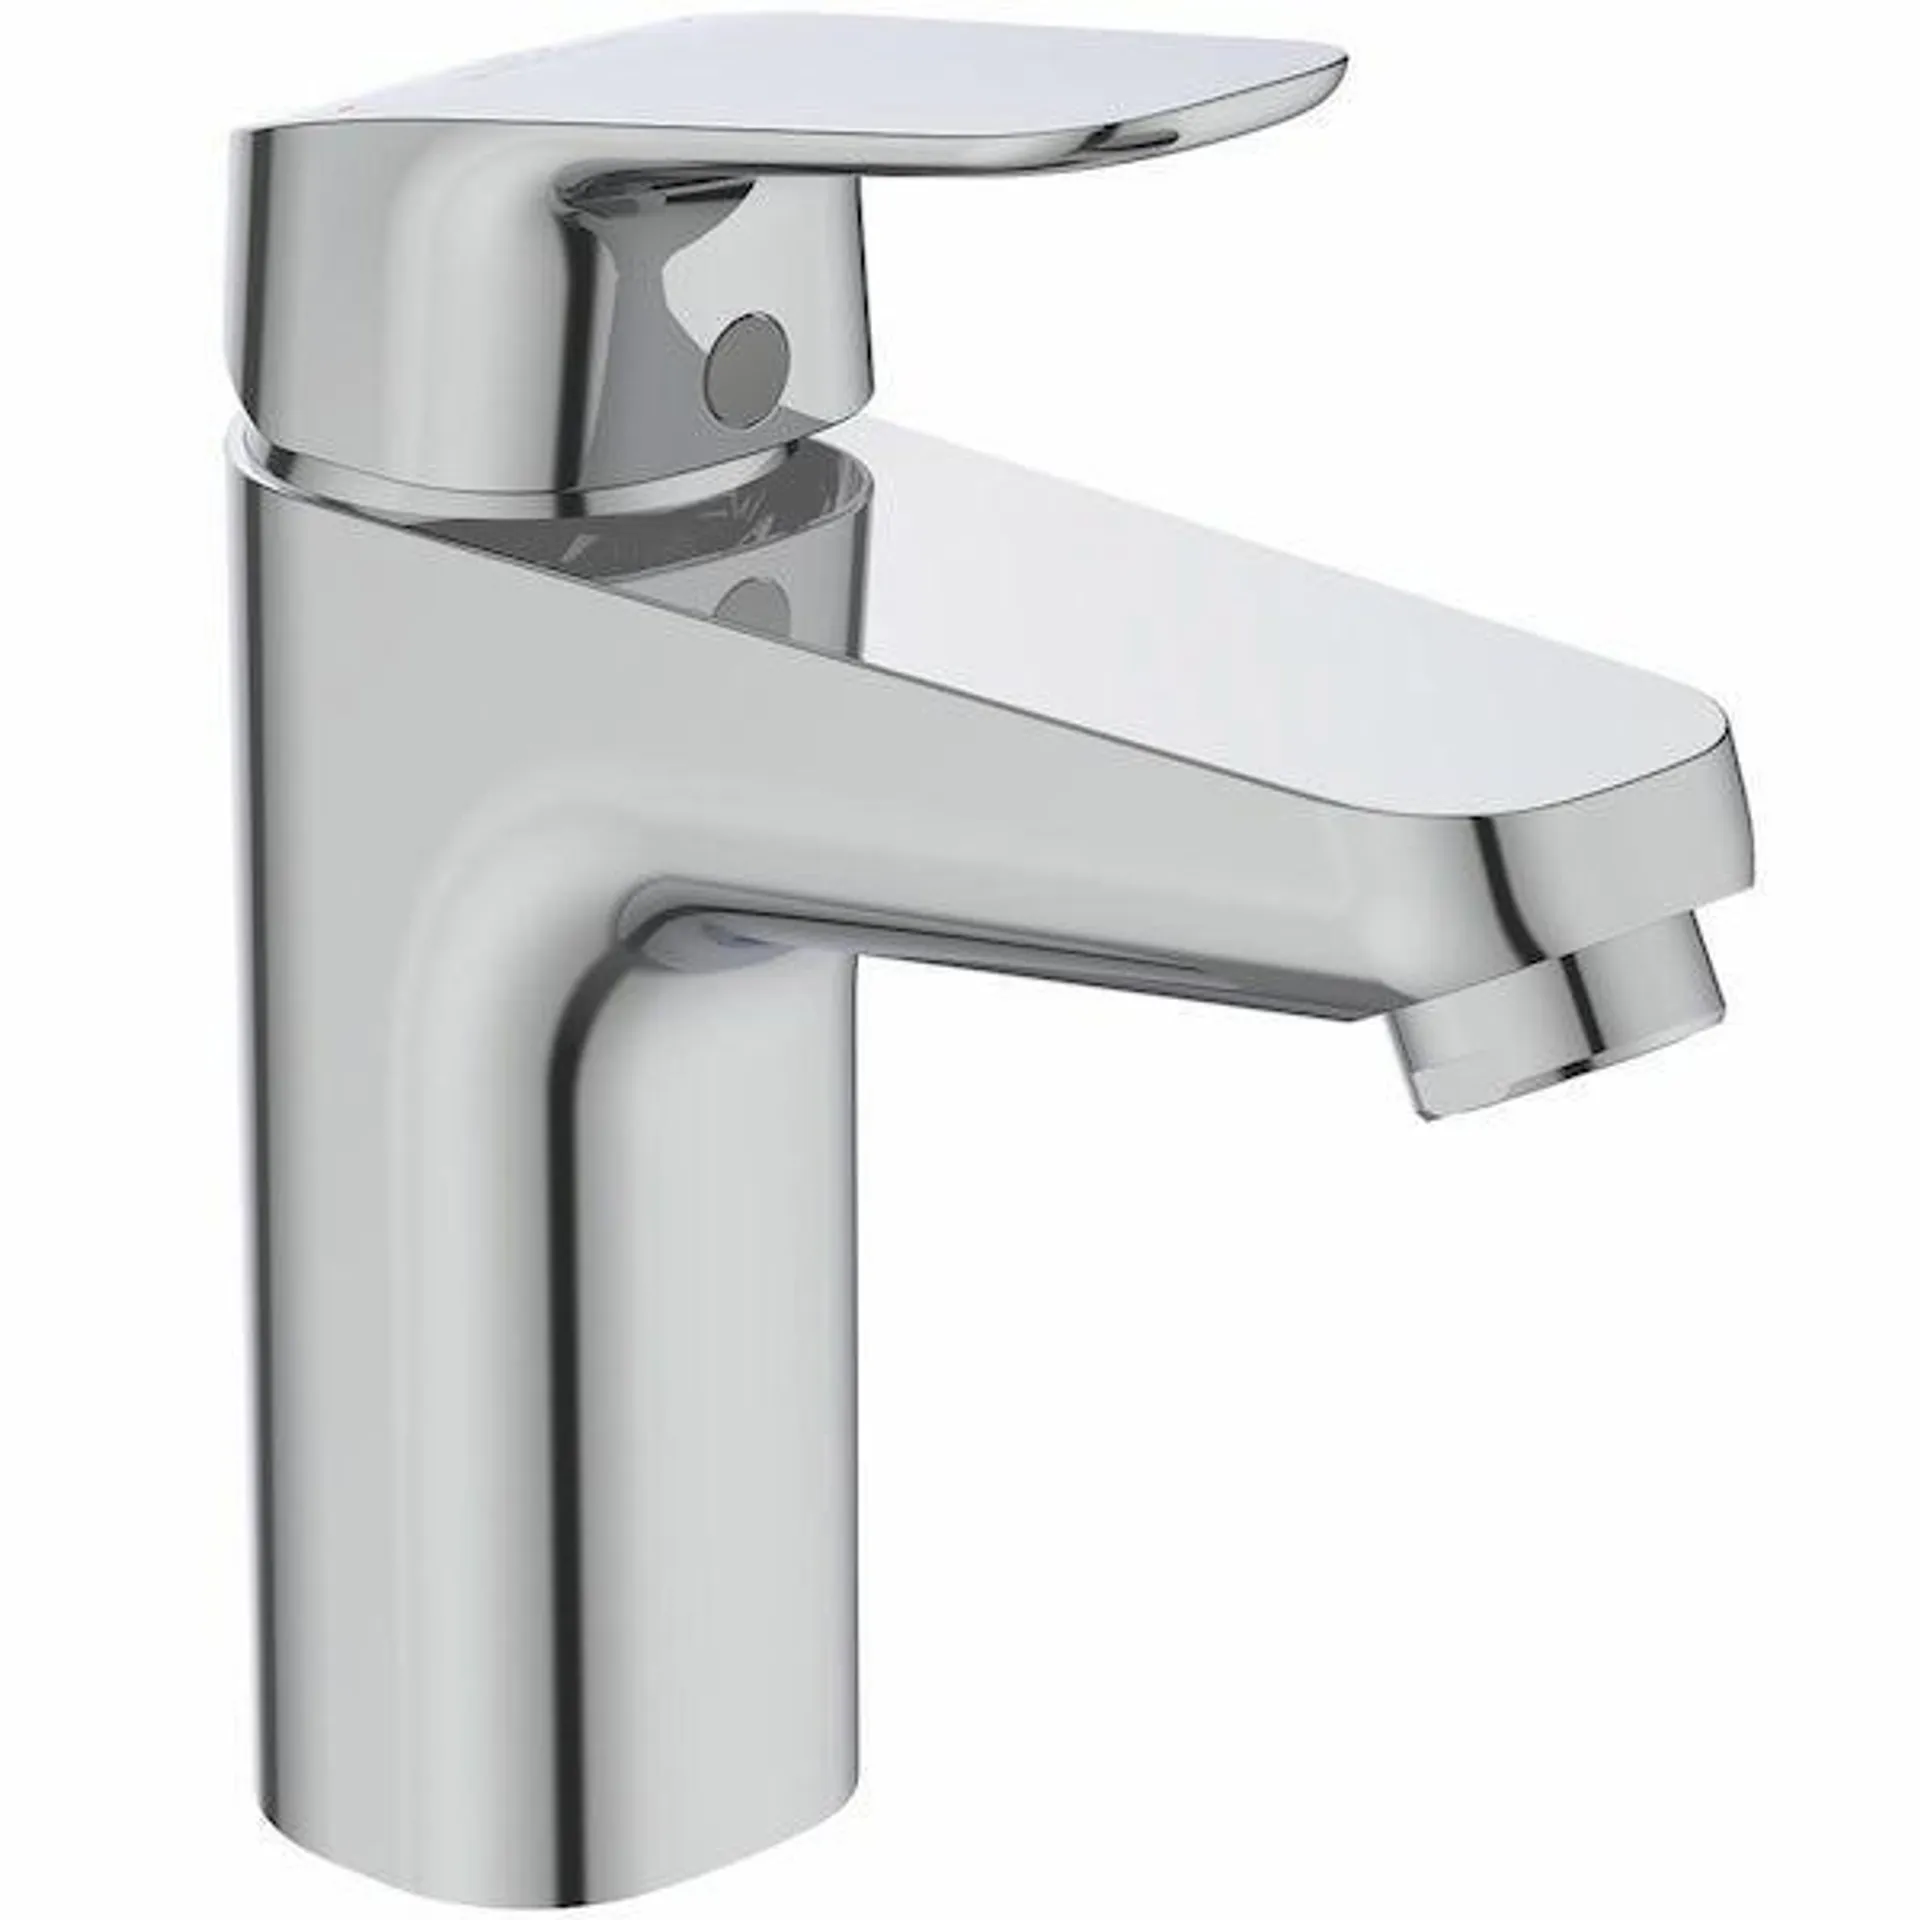 Ideal Standard Ceraflex Grande single lever basin mixer tap